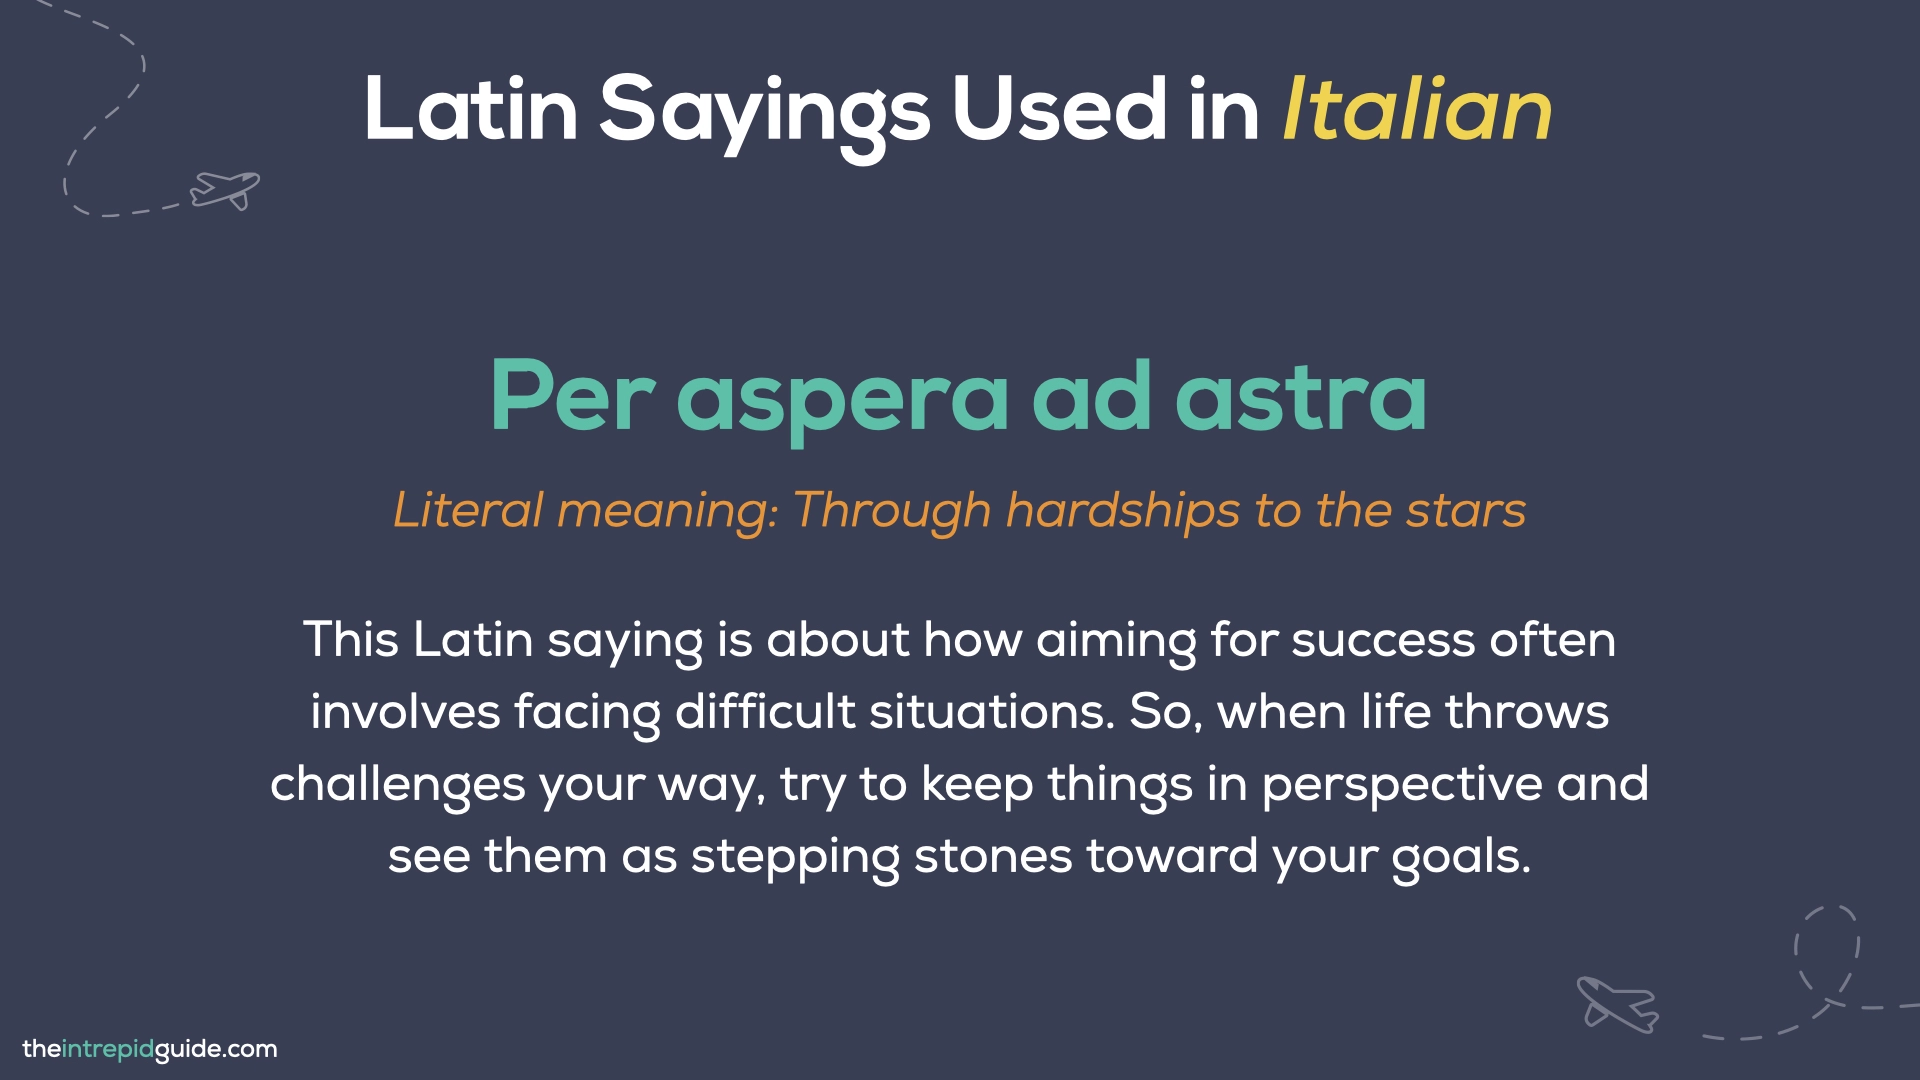 Italian Sayings About Life Per aspera ad astra